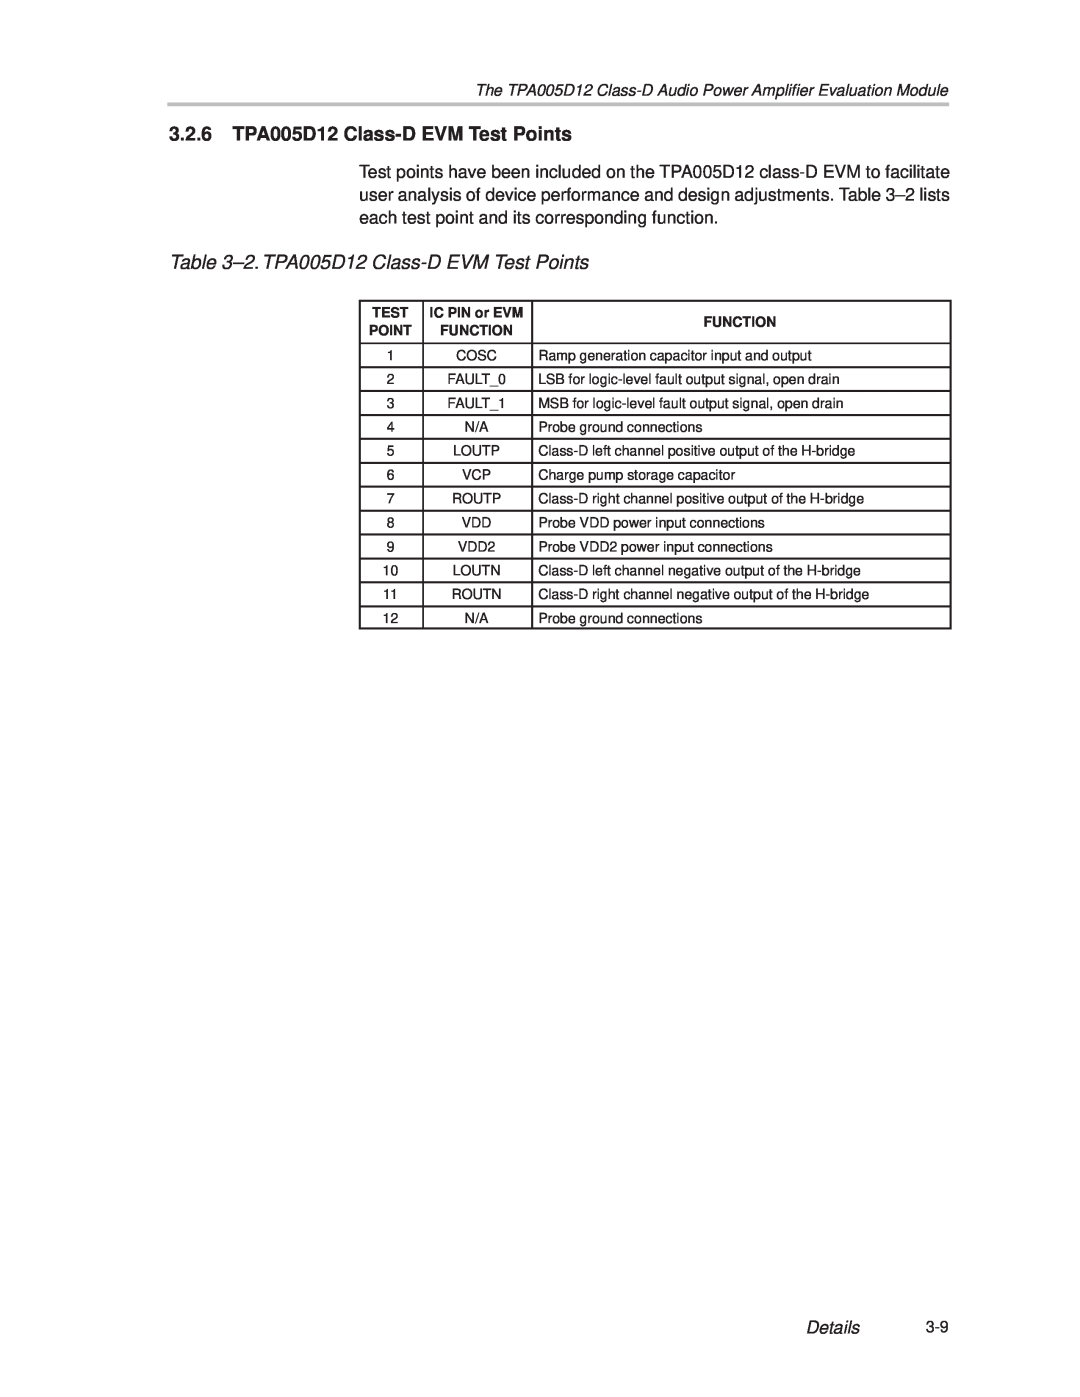 Texas Instruments manual 3.2.6TPA005D12 Class-DEVM Test Points, ±2. TPA005D12 Class-DEVM Test Points, Details 